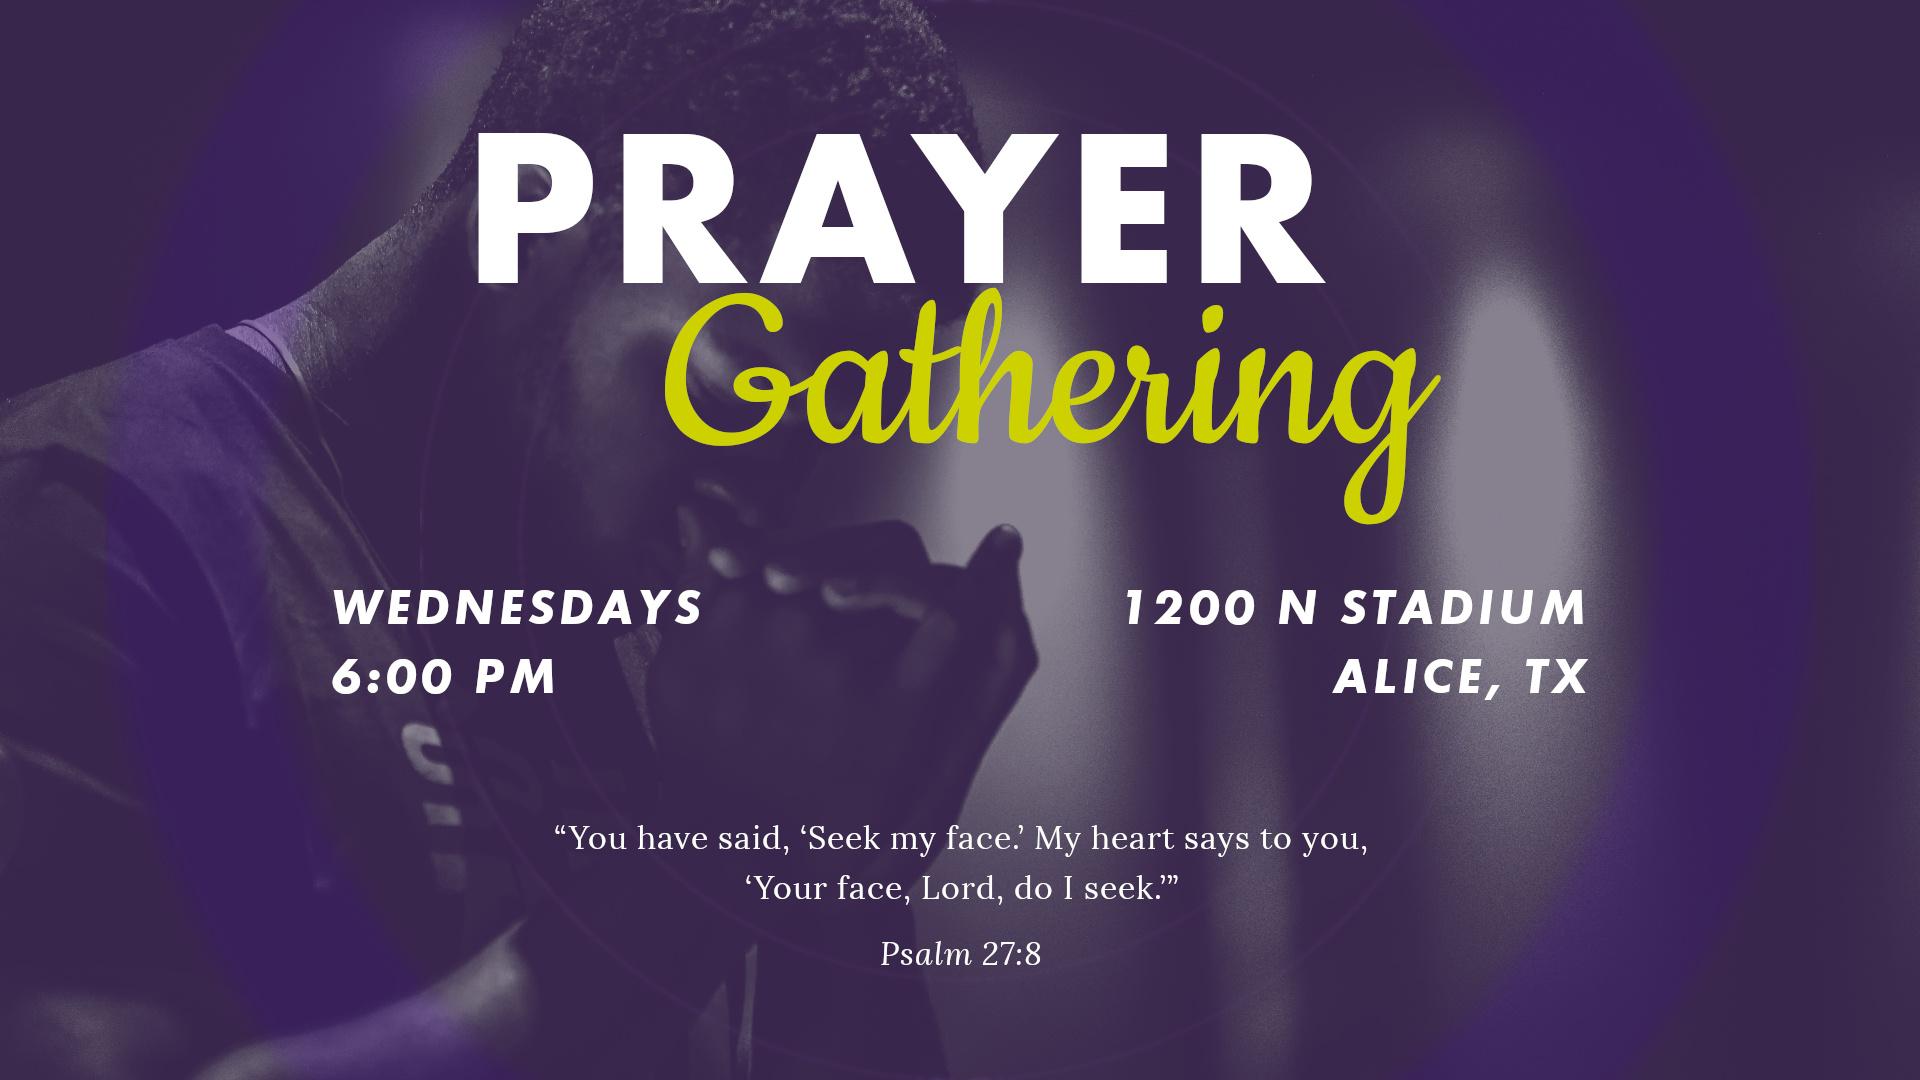 Prayer gathering on Wednesdays at 6 pm